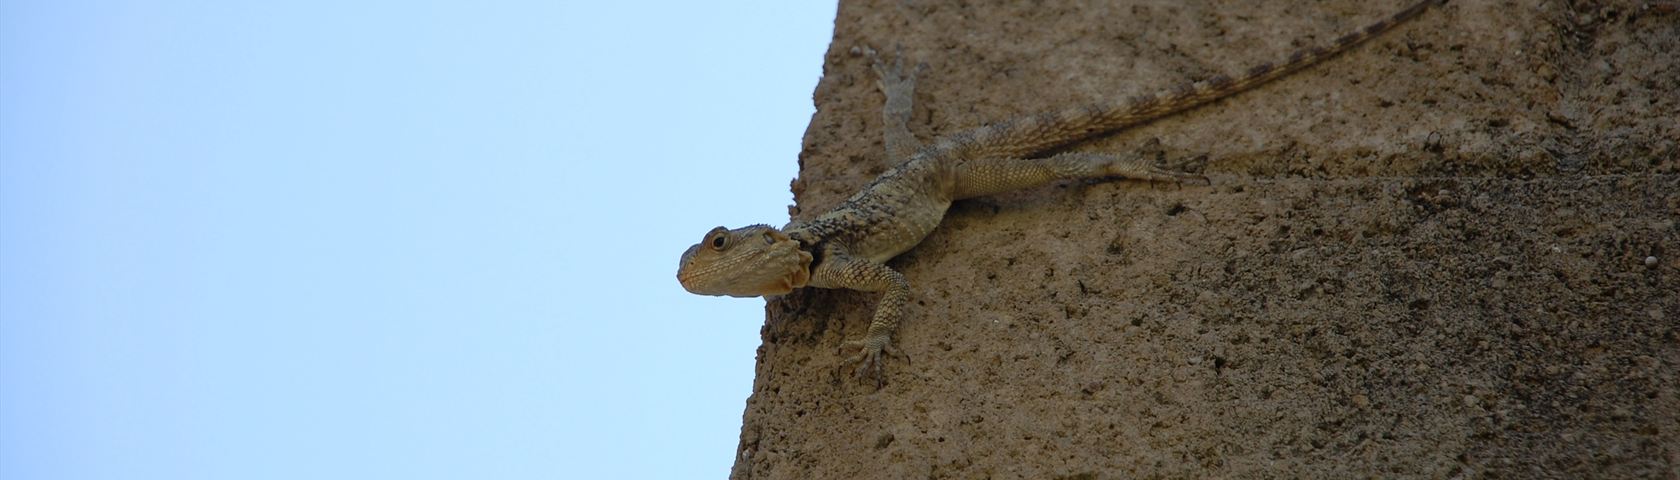 Lizard on the Wall